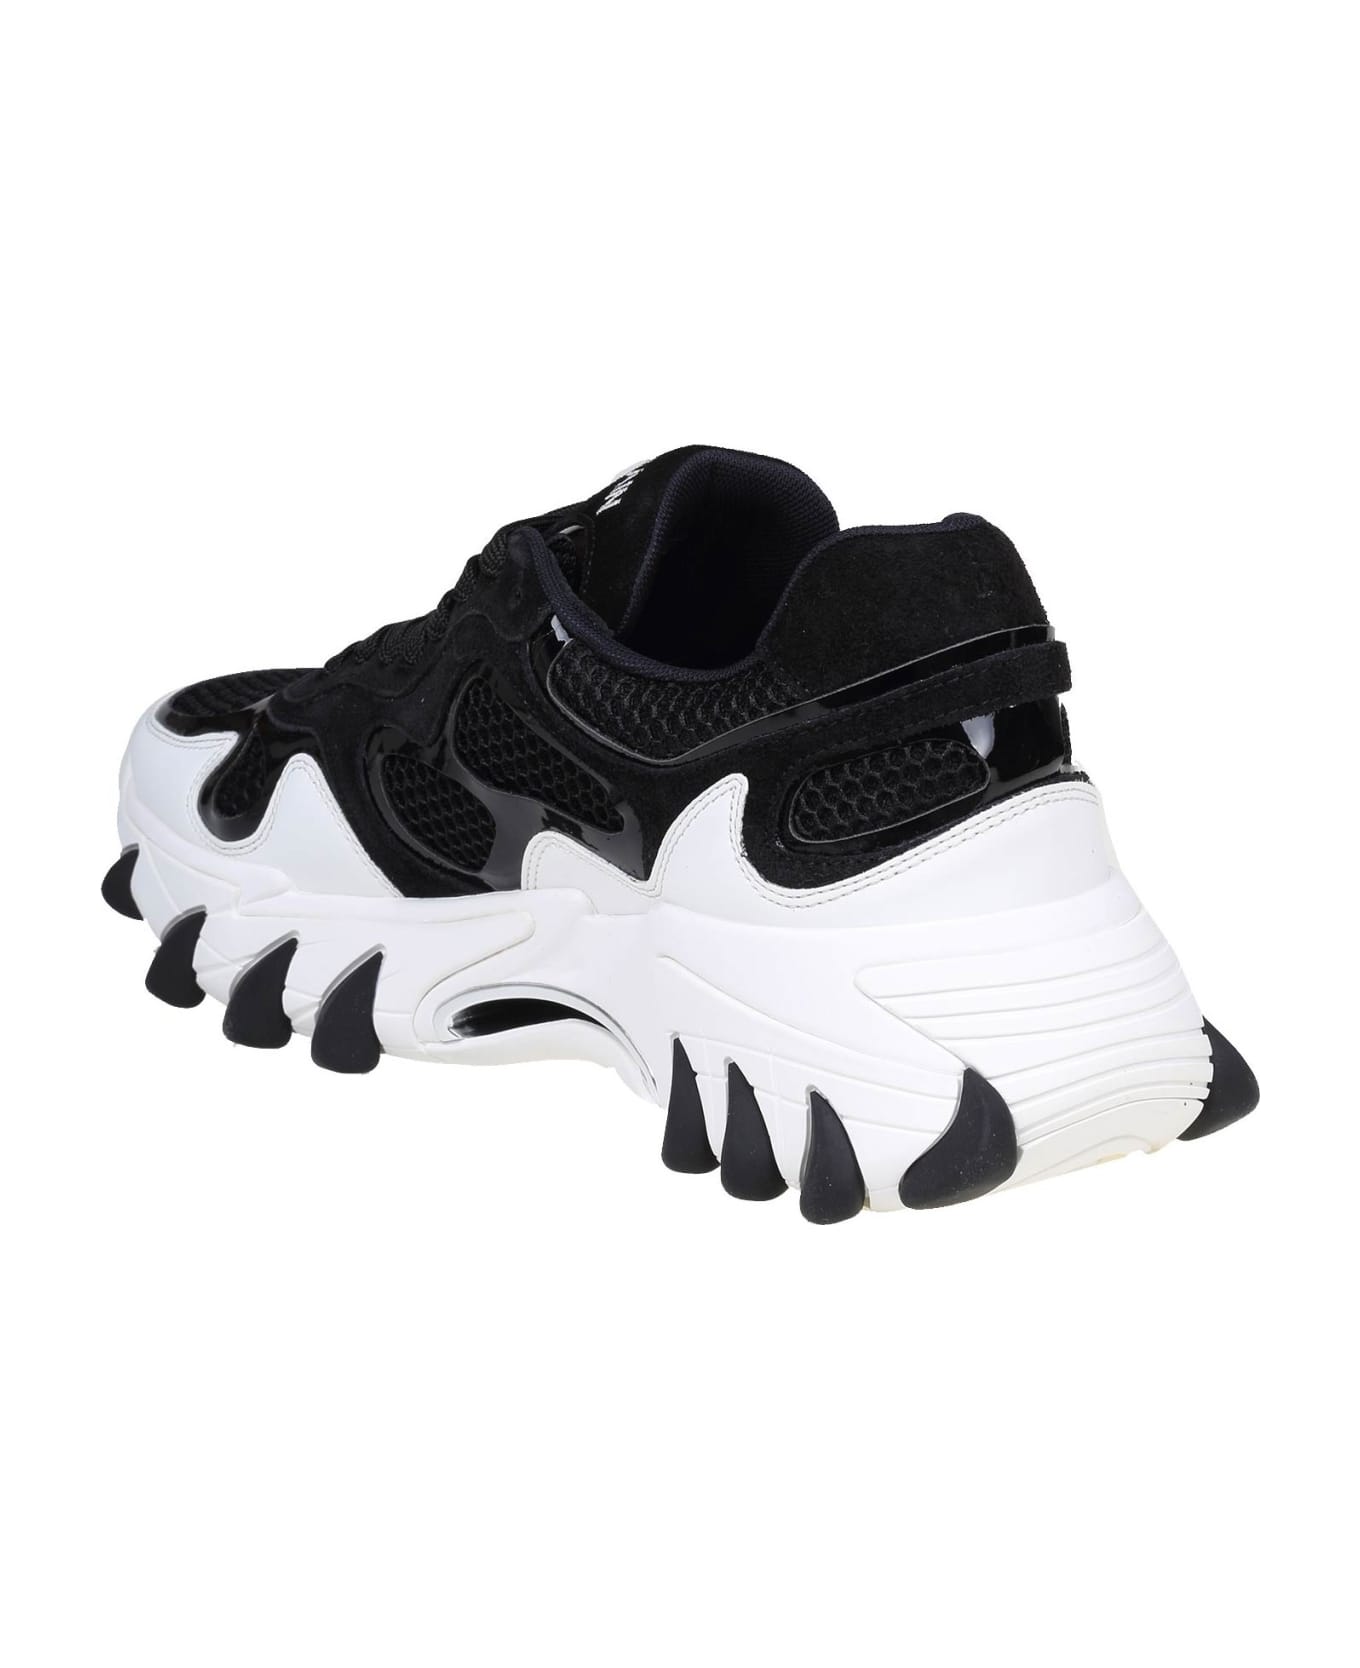 Balmain B-east Sneakers - Black /White